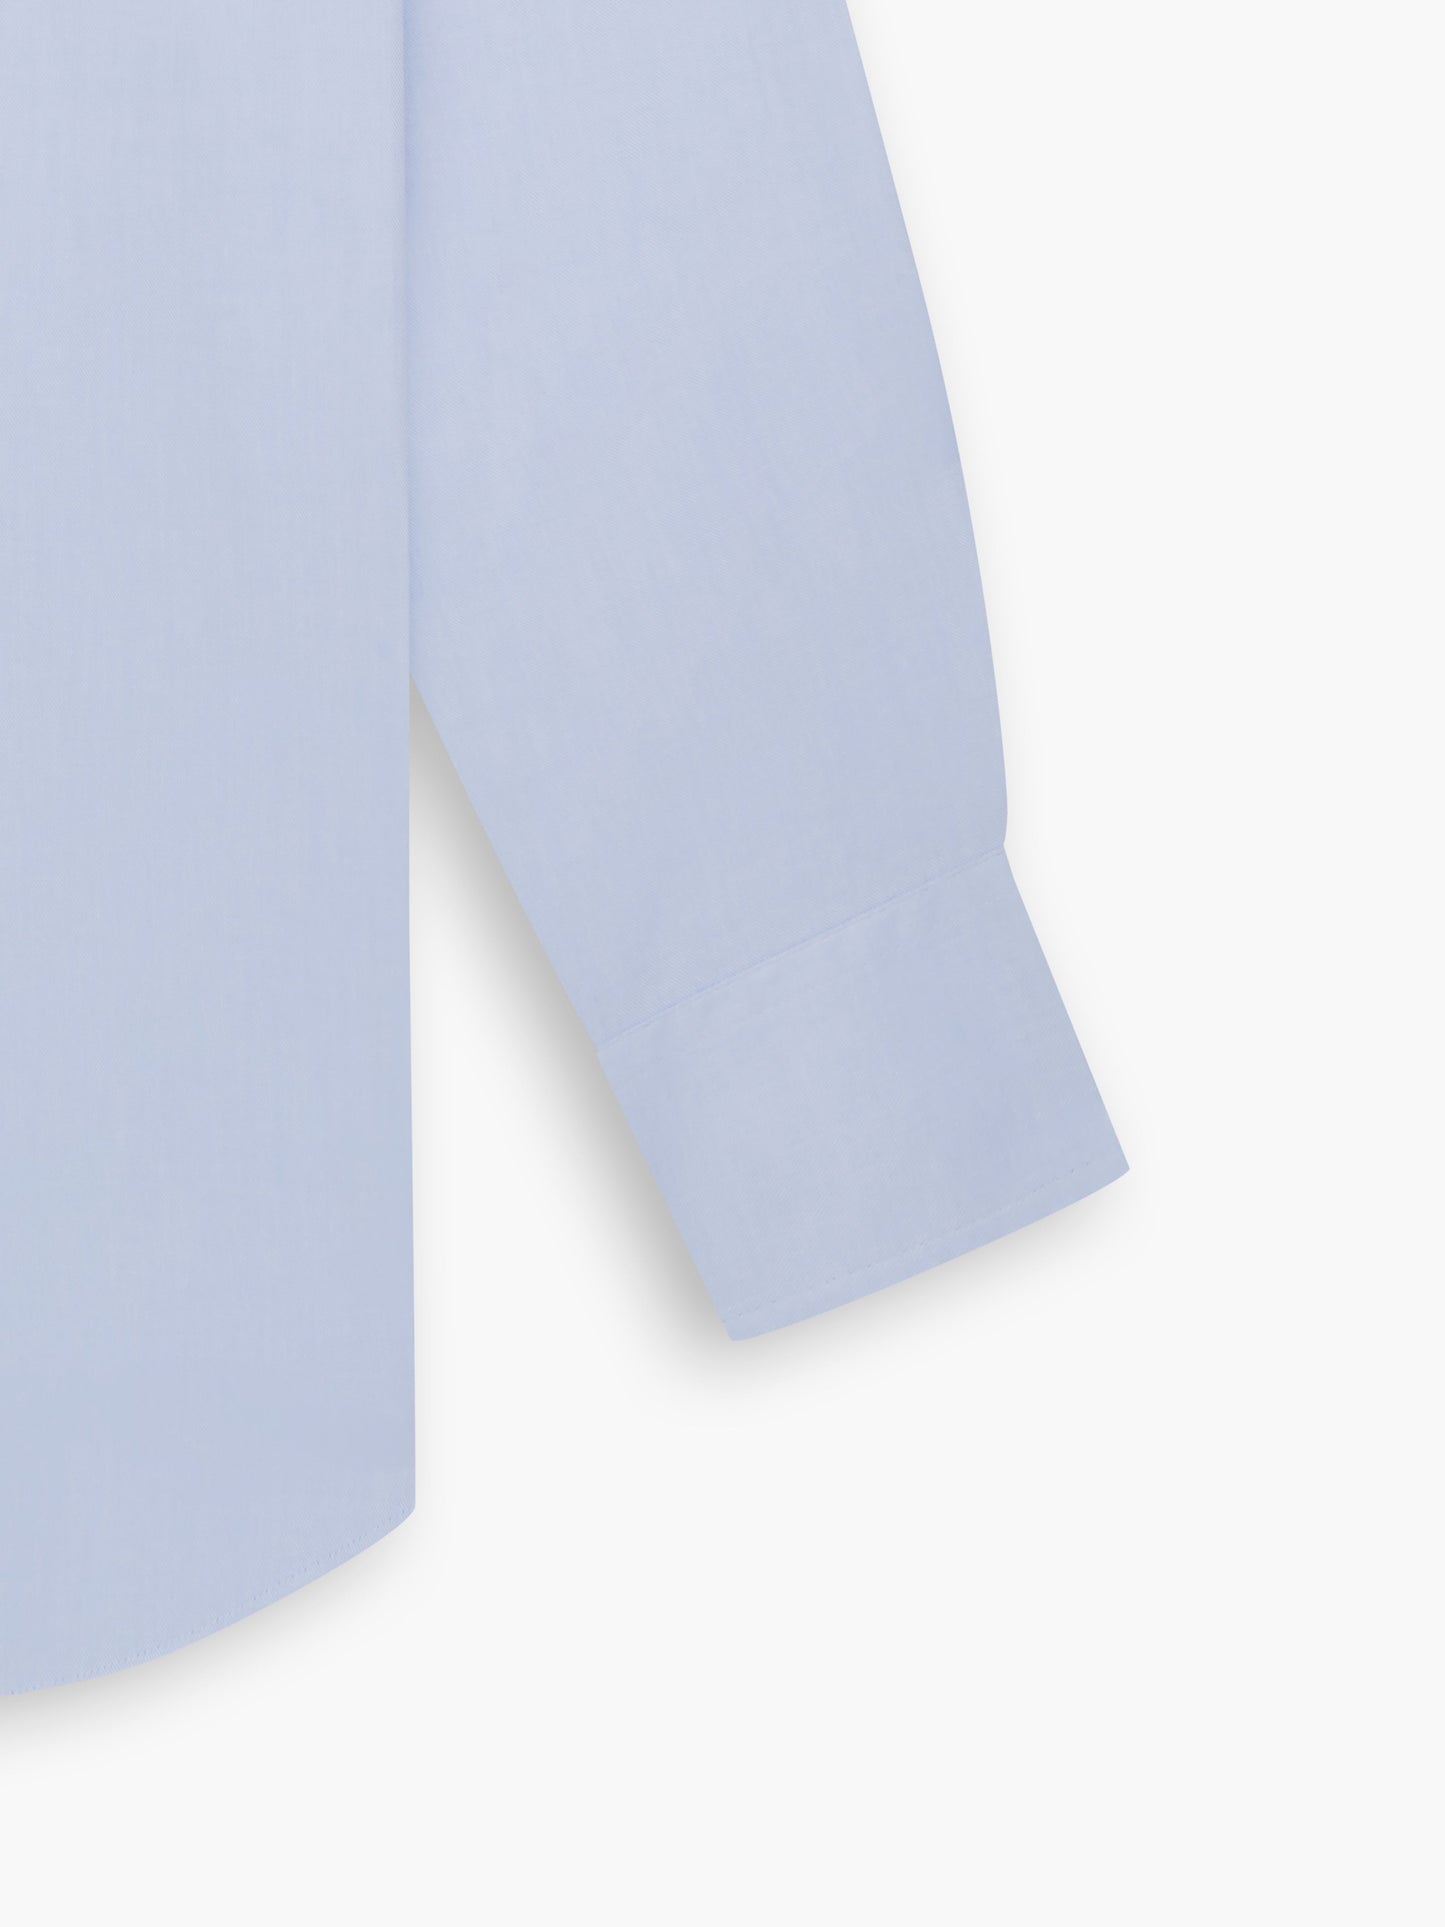 Non-Iron Light Blue Twill Slim Fit Single Cuff Classic Collar Shirt